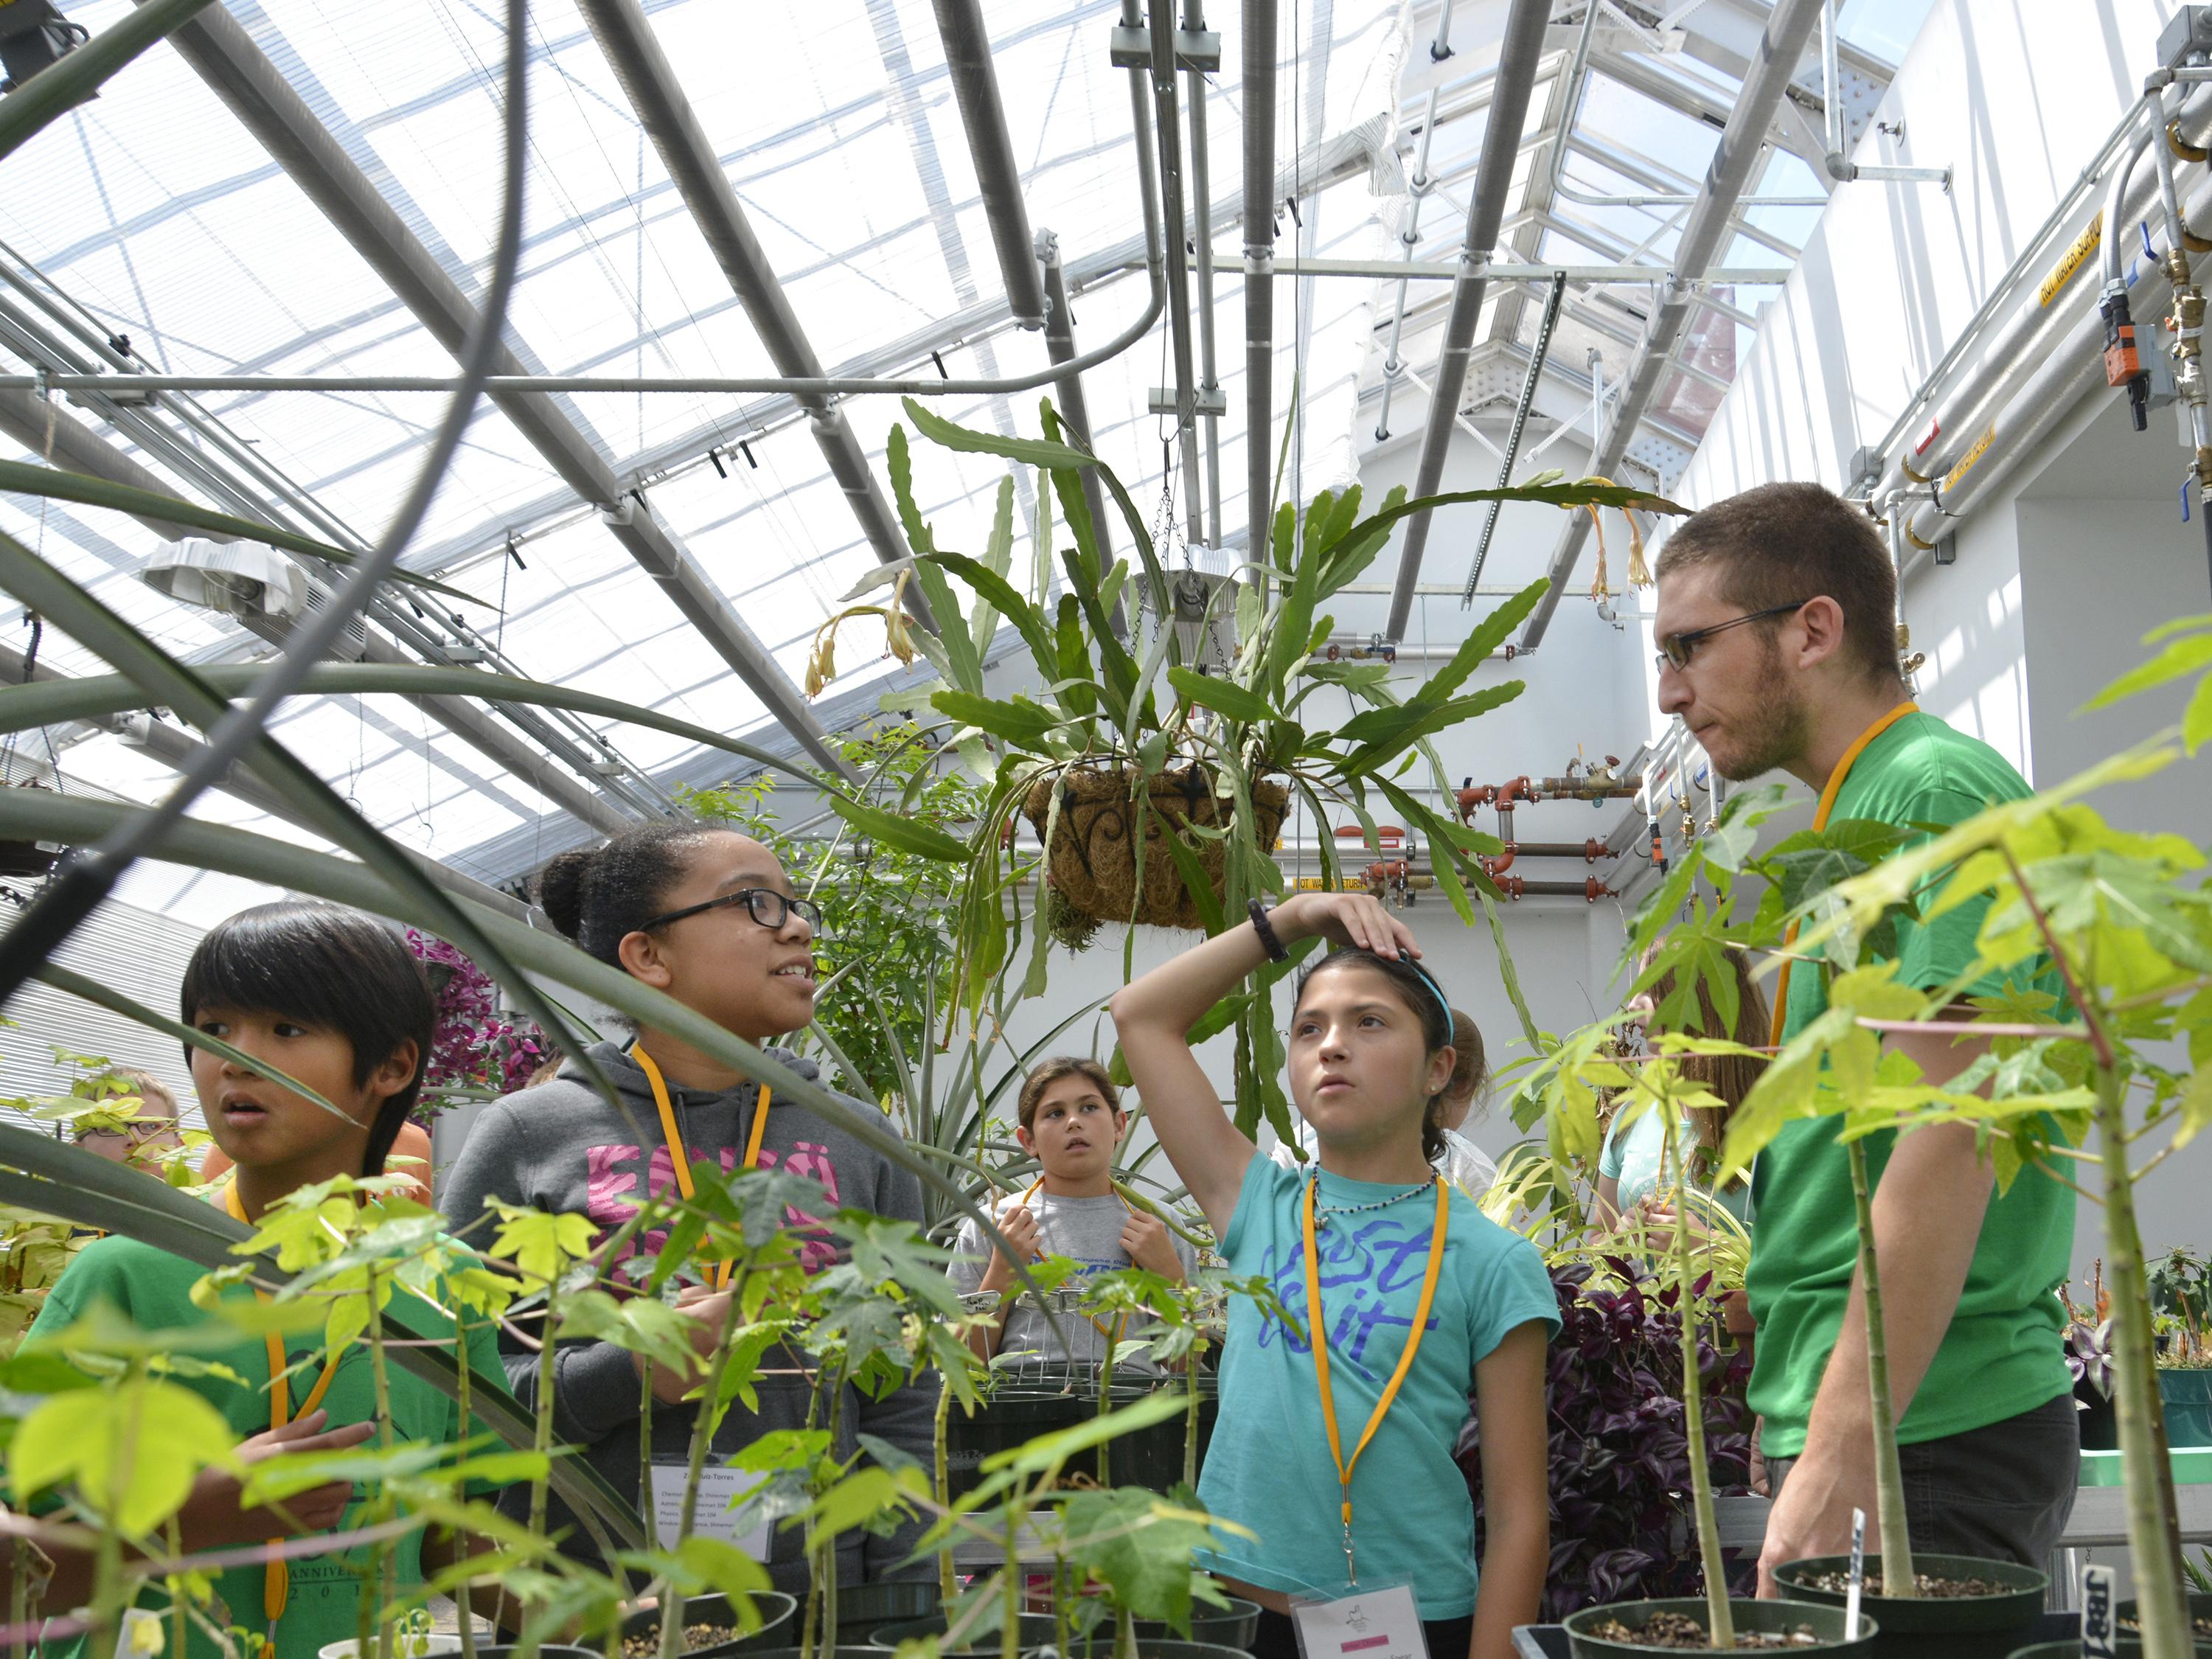 Children at the Sheldon Institute explore the greenhouse atop the Richard S. Shineman Center.